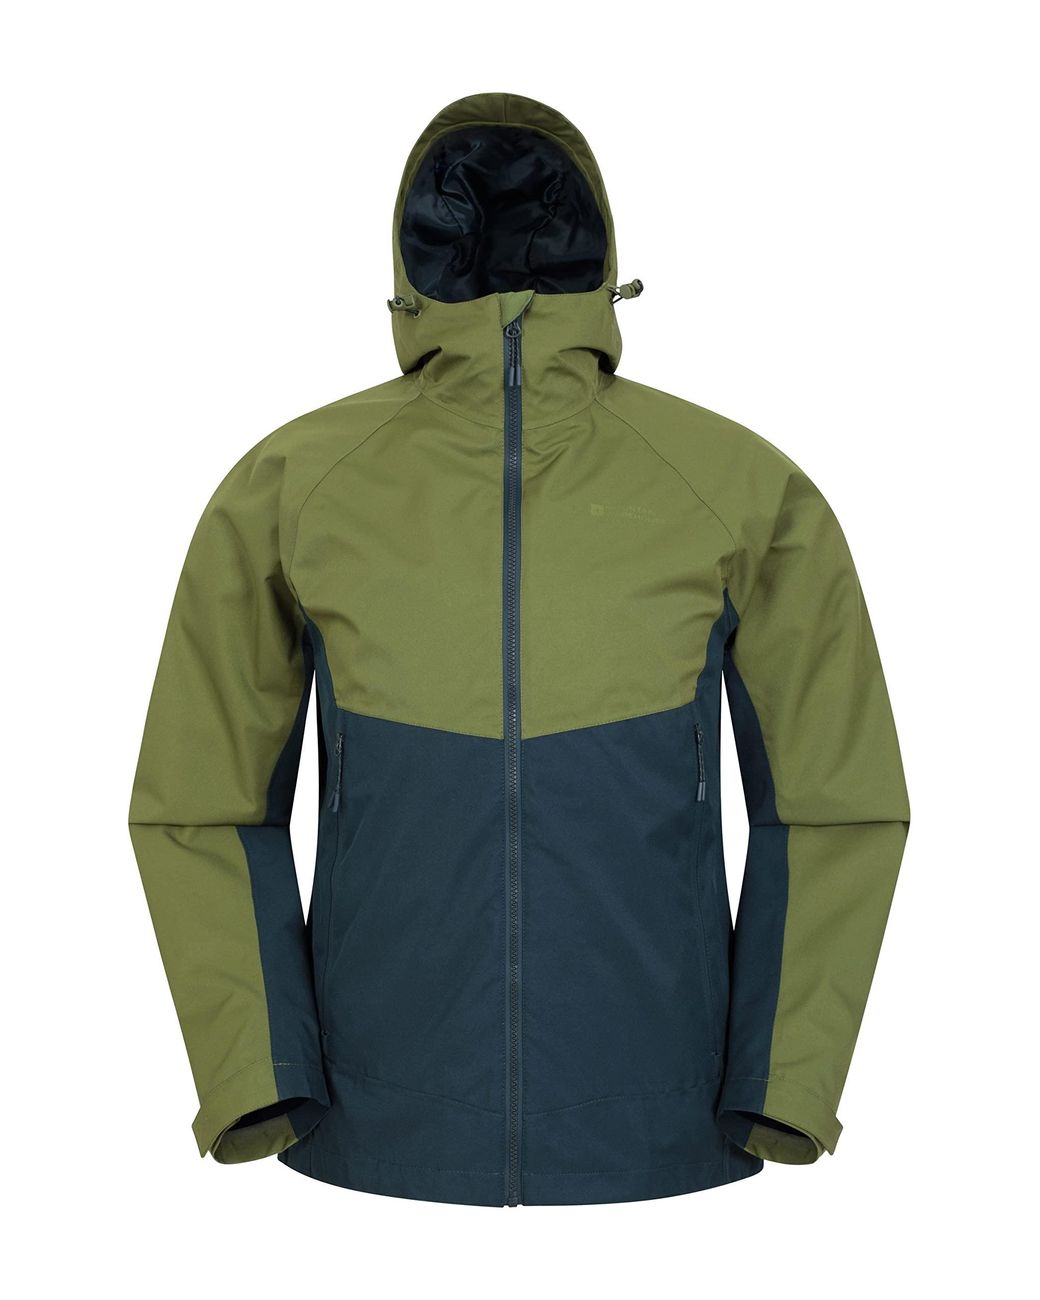 Buy Mountain Warehouse Black Pakka Waterproof Jacket - Mens from